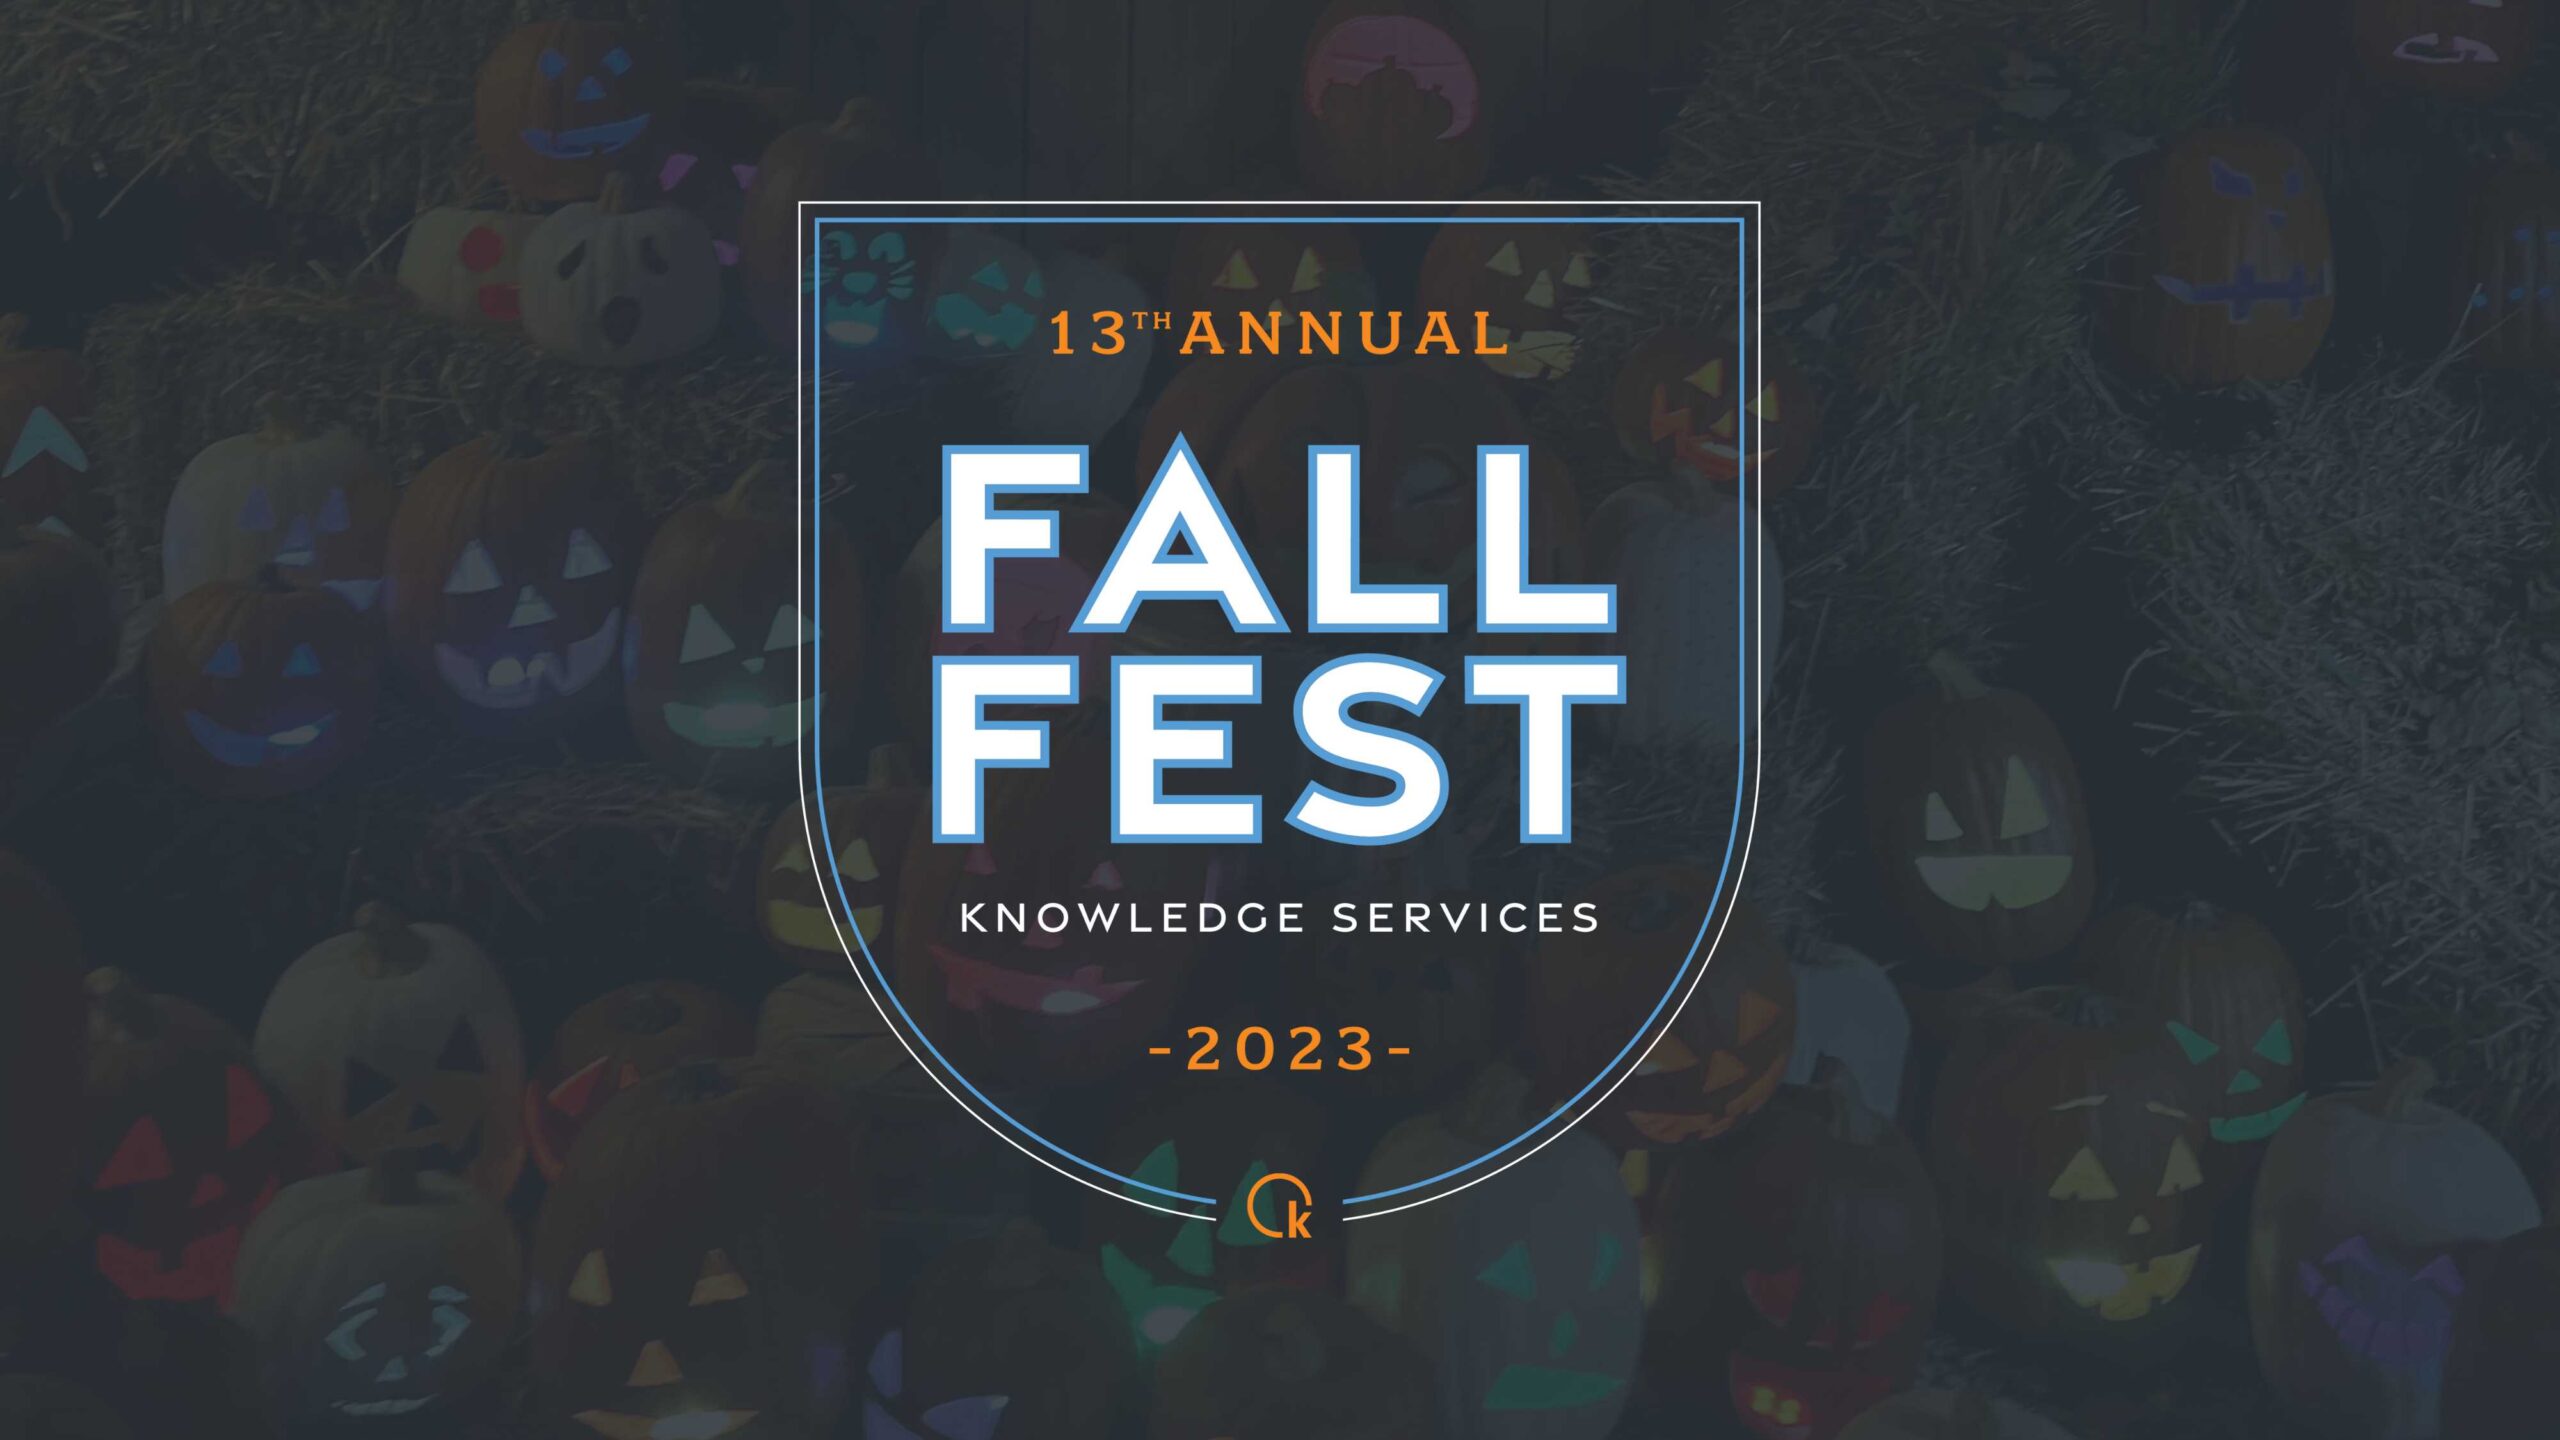 13th Annual Fall Fest,